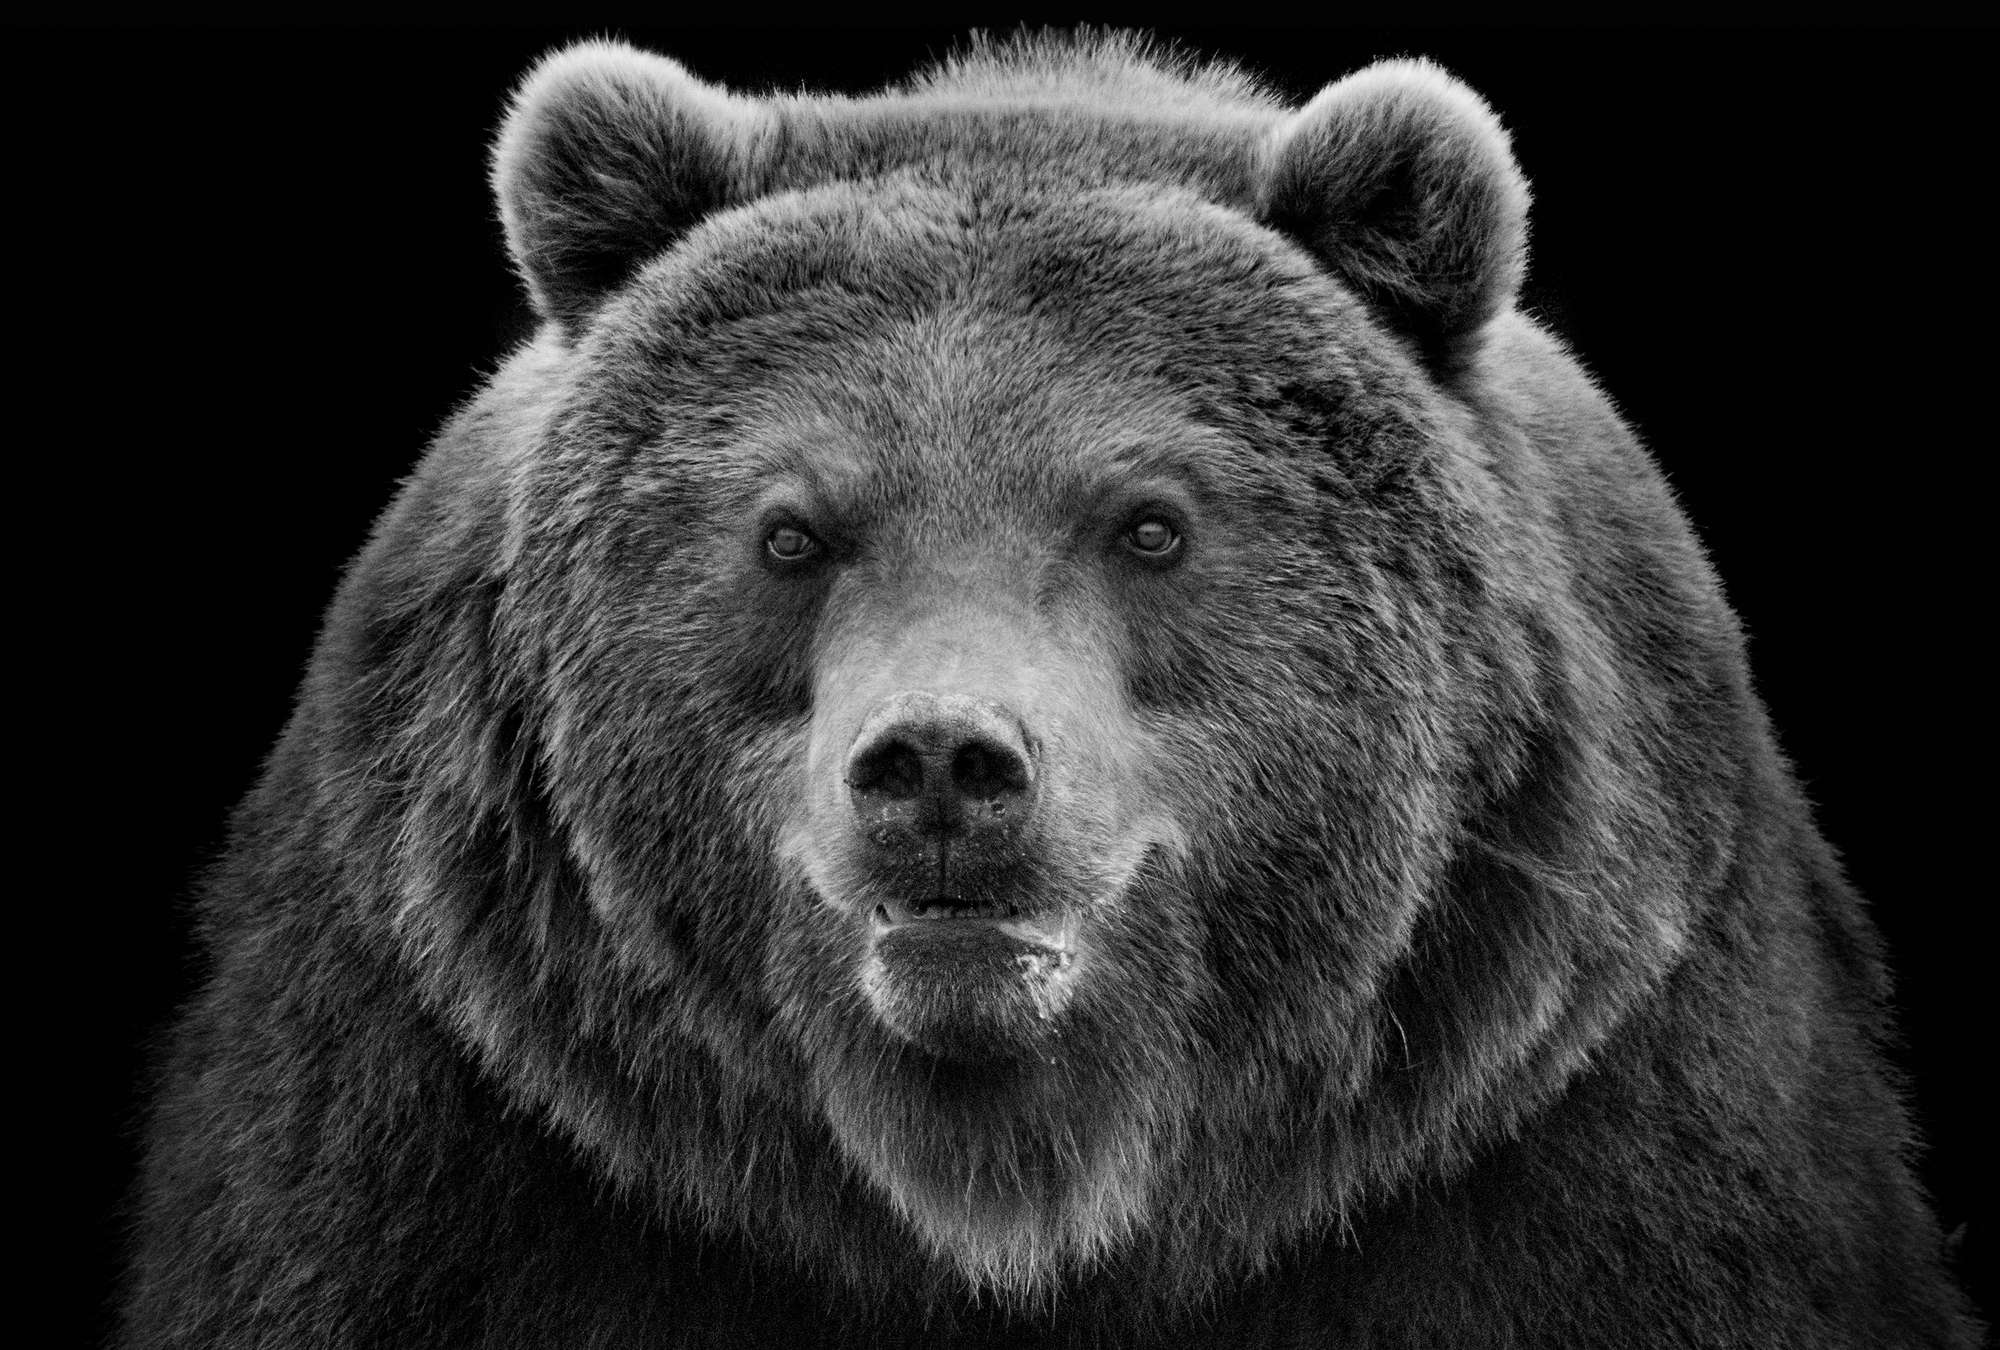             Fotomurali Strong Grizzly Bear su sfondo nero
        